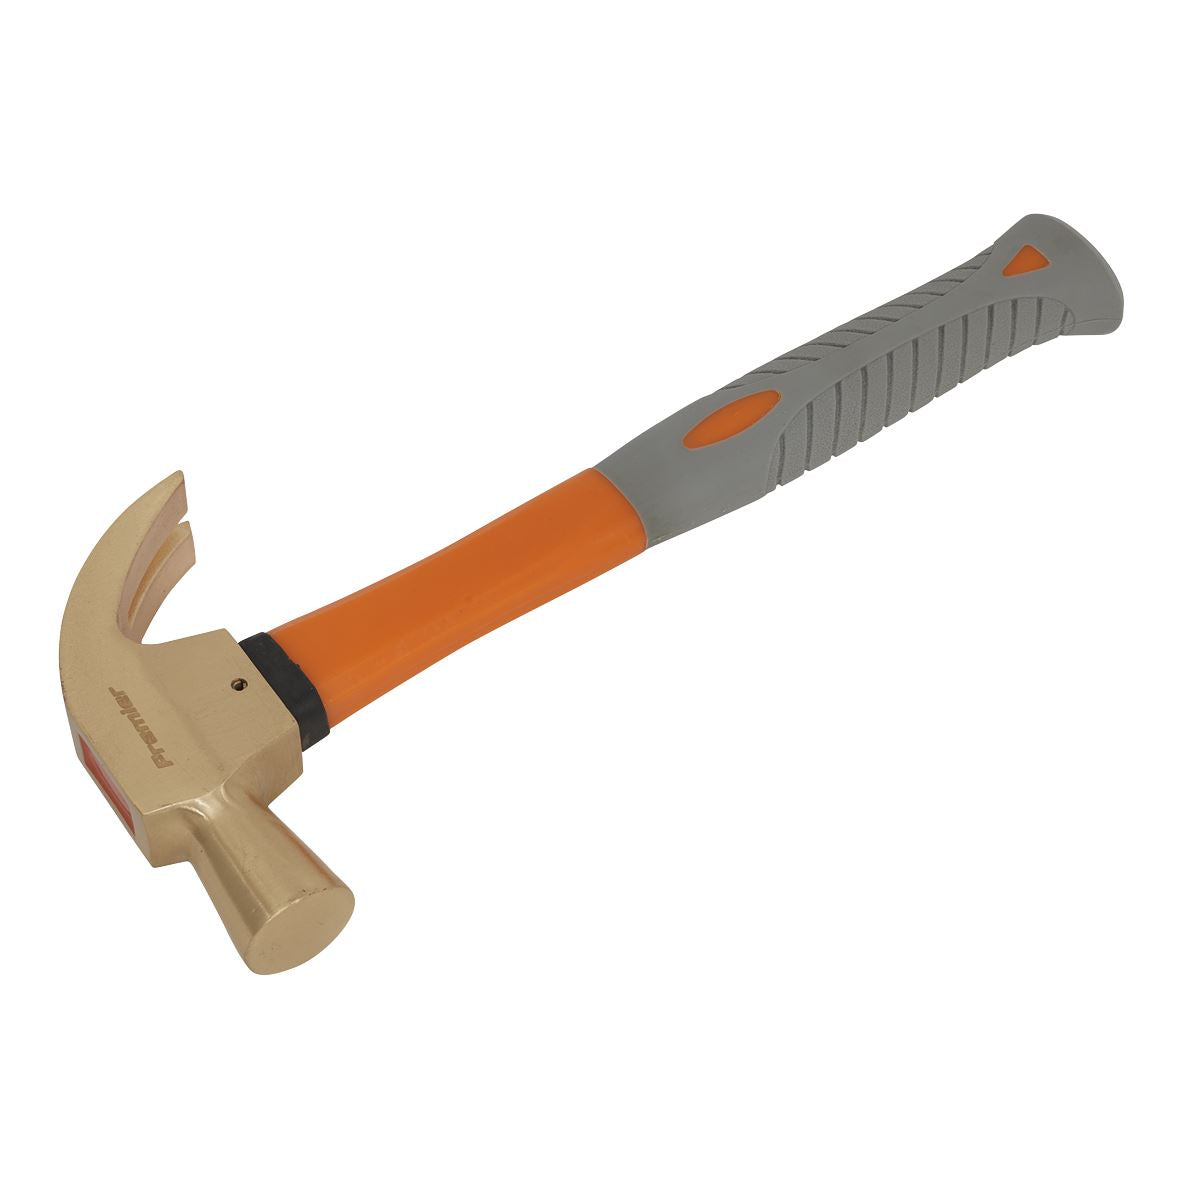 Sealey Premier Claw Hammer 24oz - Non-Sparking